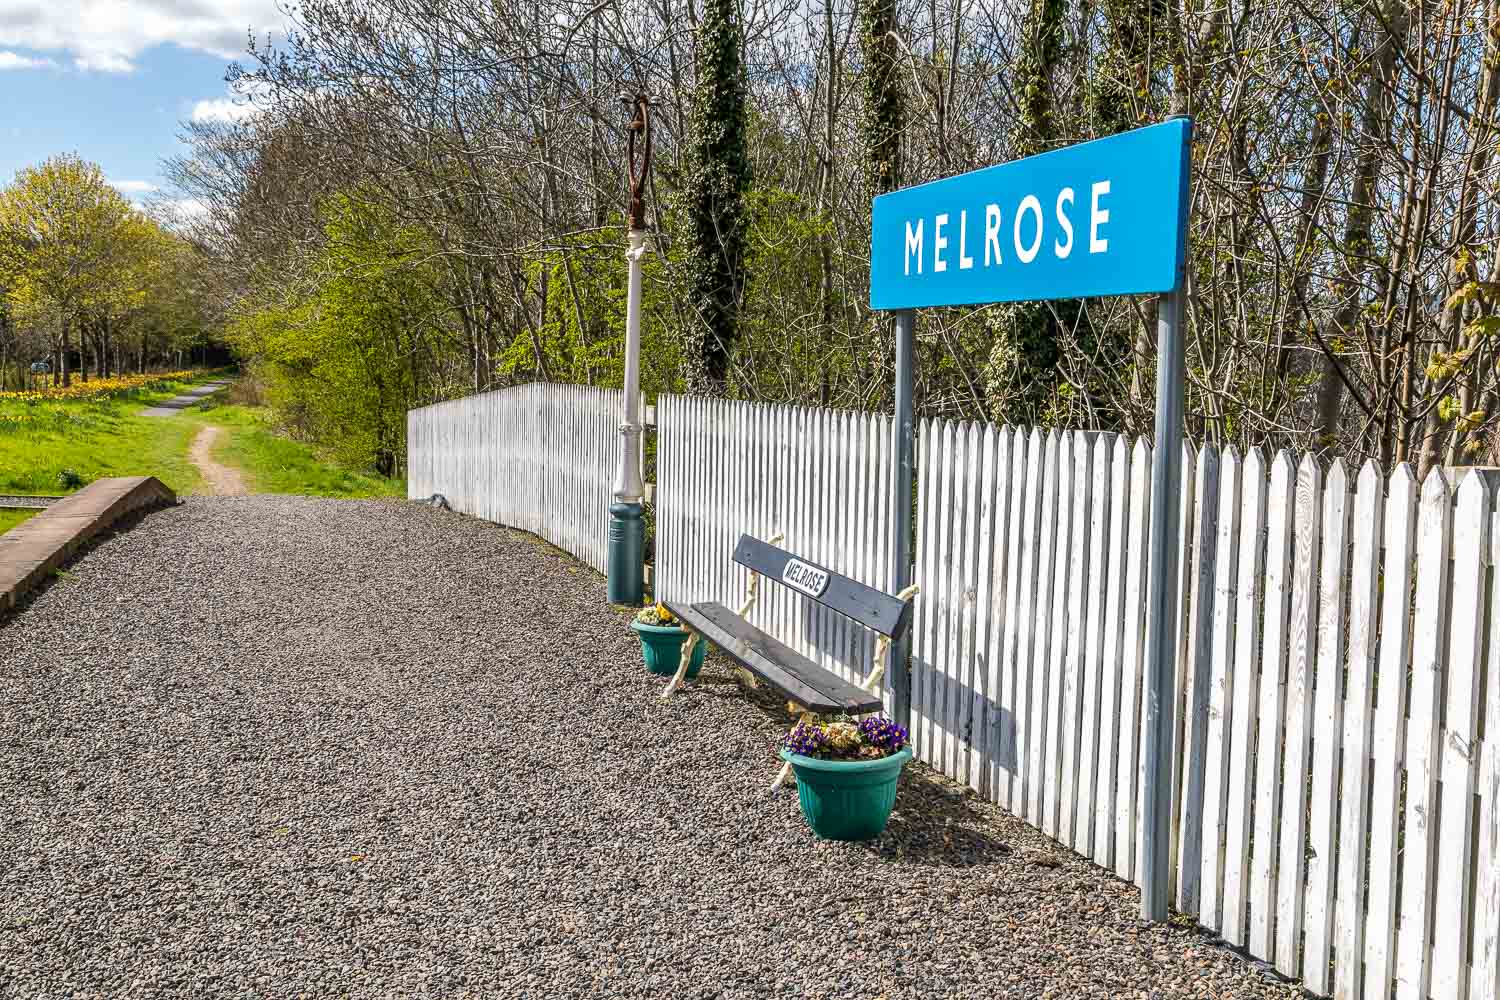 Melrose station